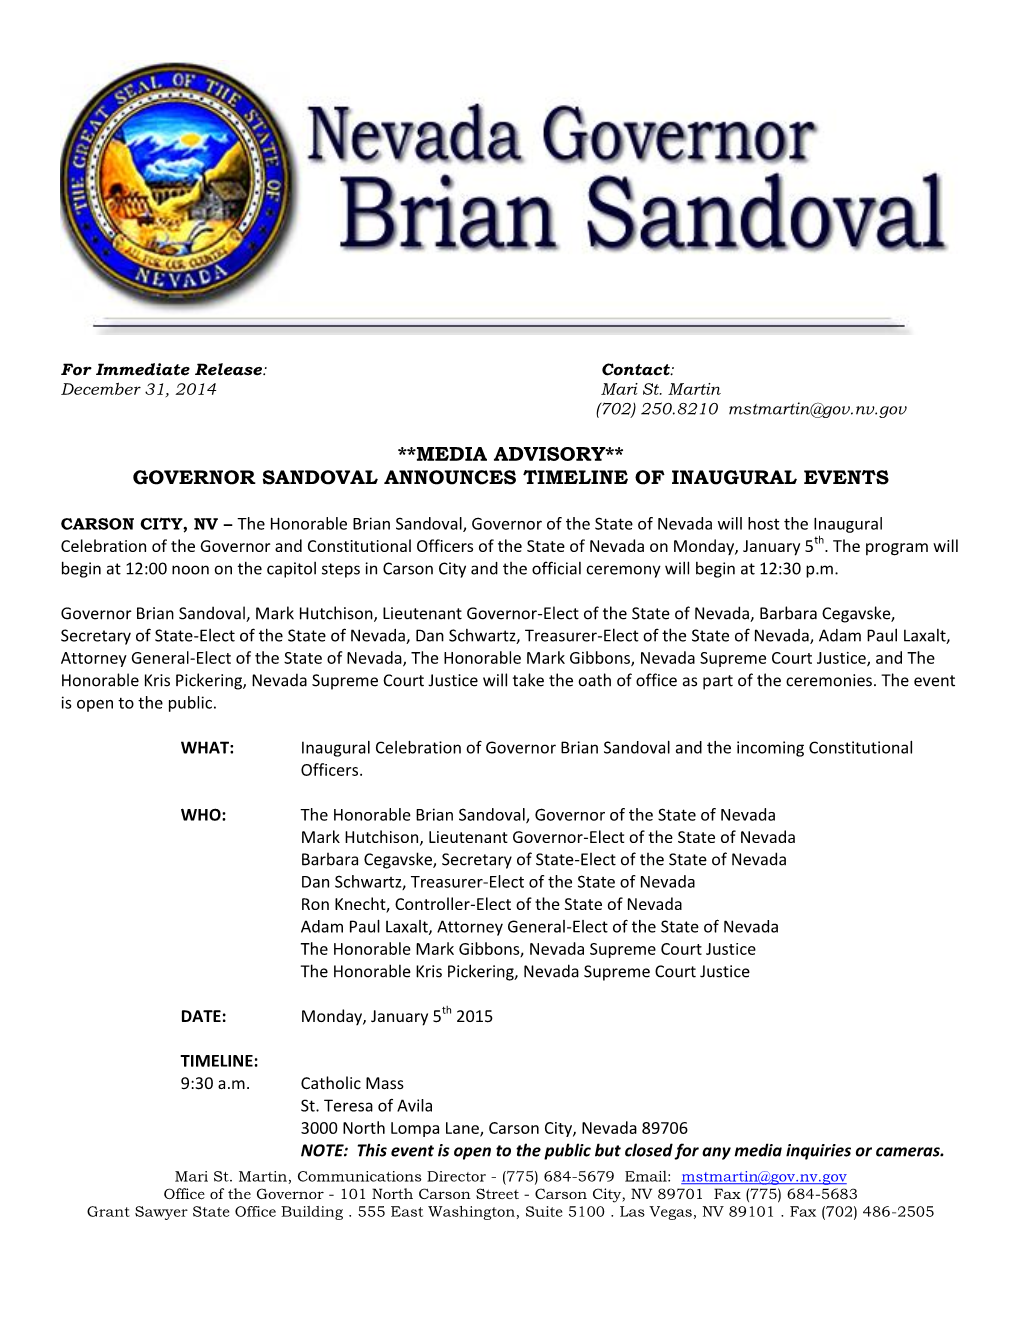 Media Advisory** Governor Sandoval Announces Timeline of Inaugural Events